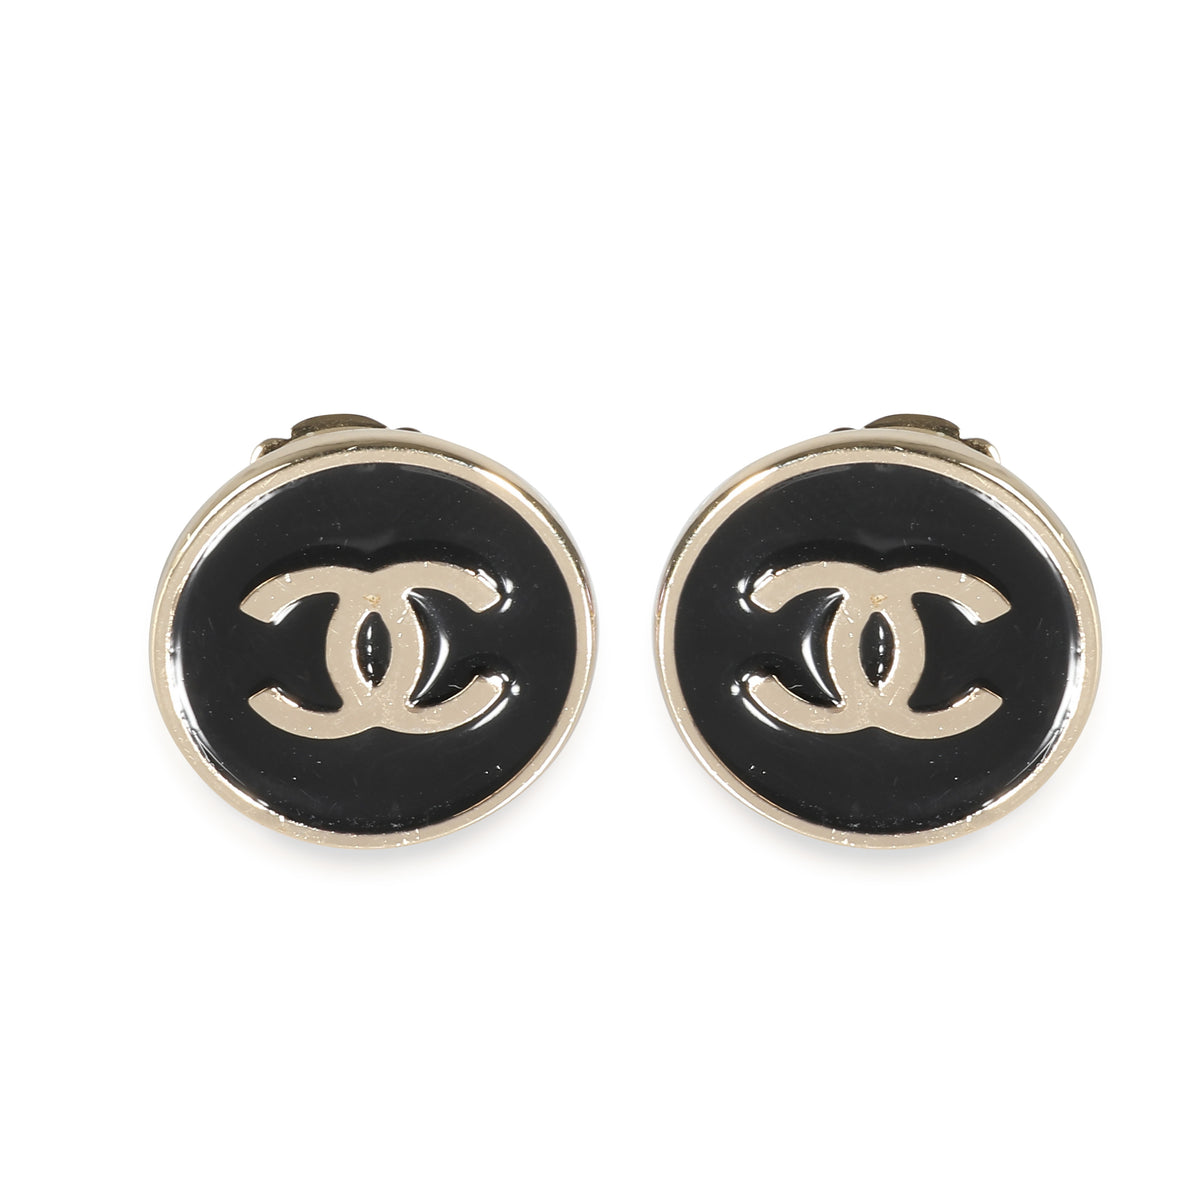 CC Gold Tone with Black Enamel Button Earrings